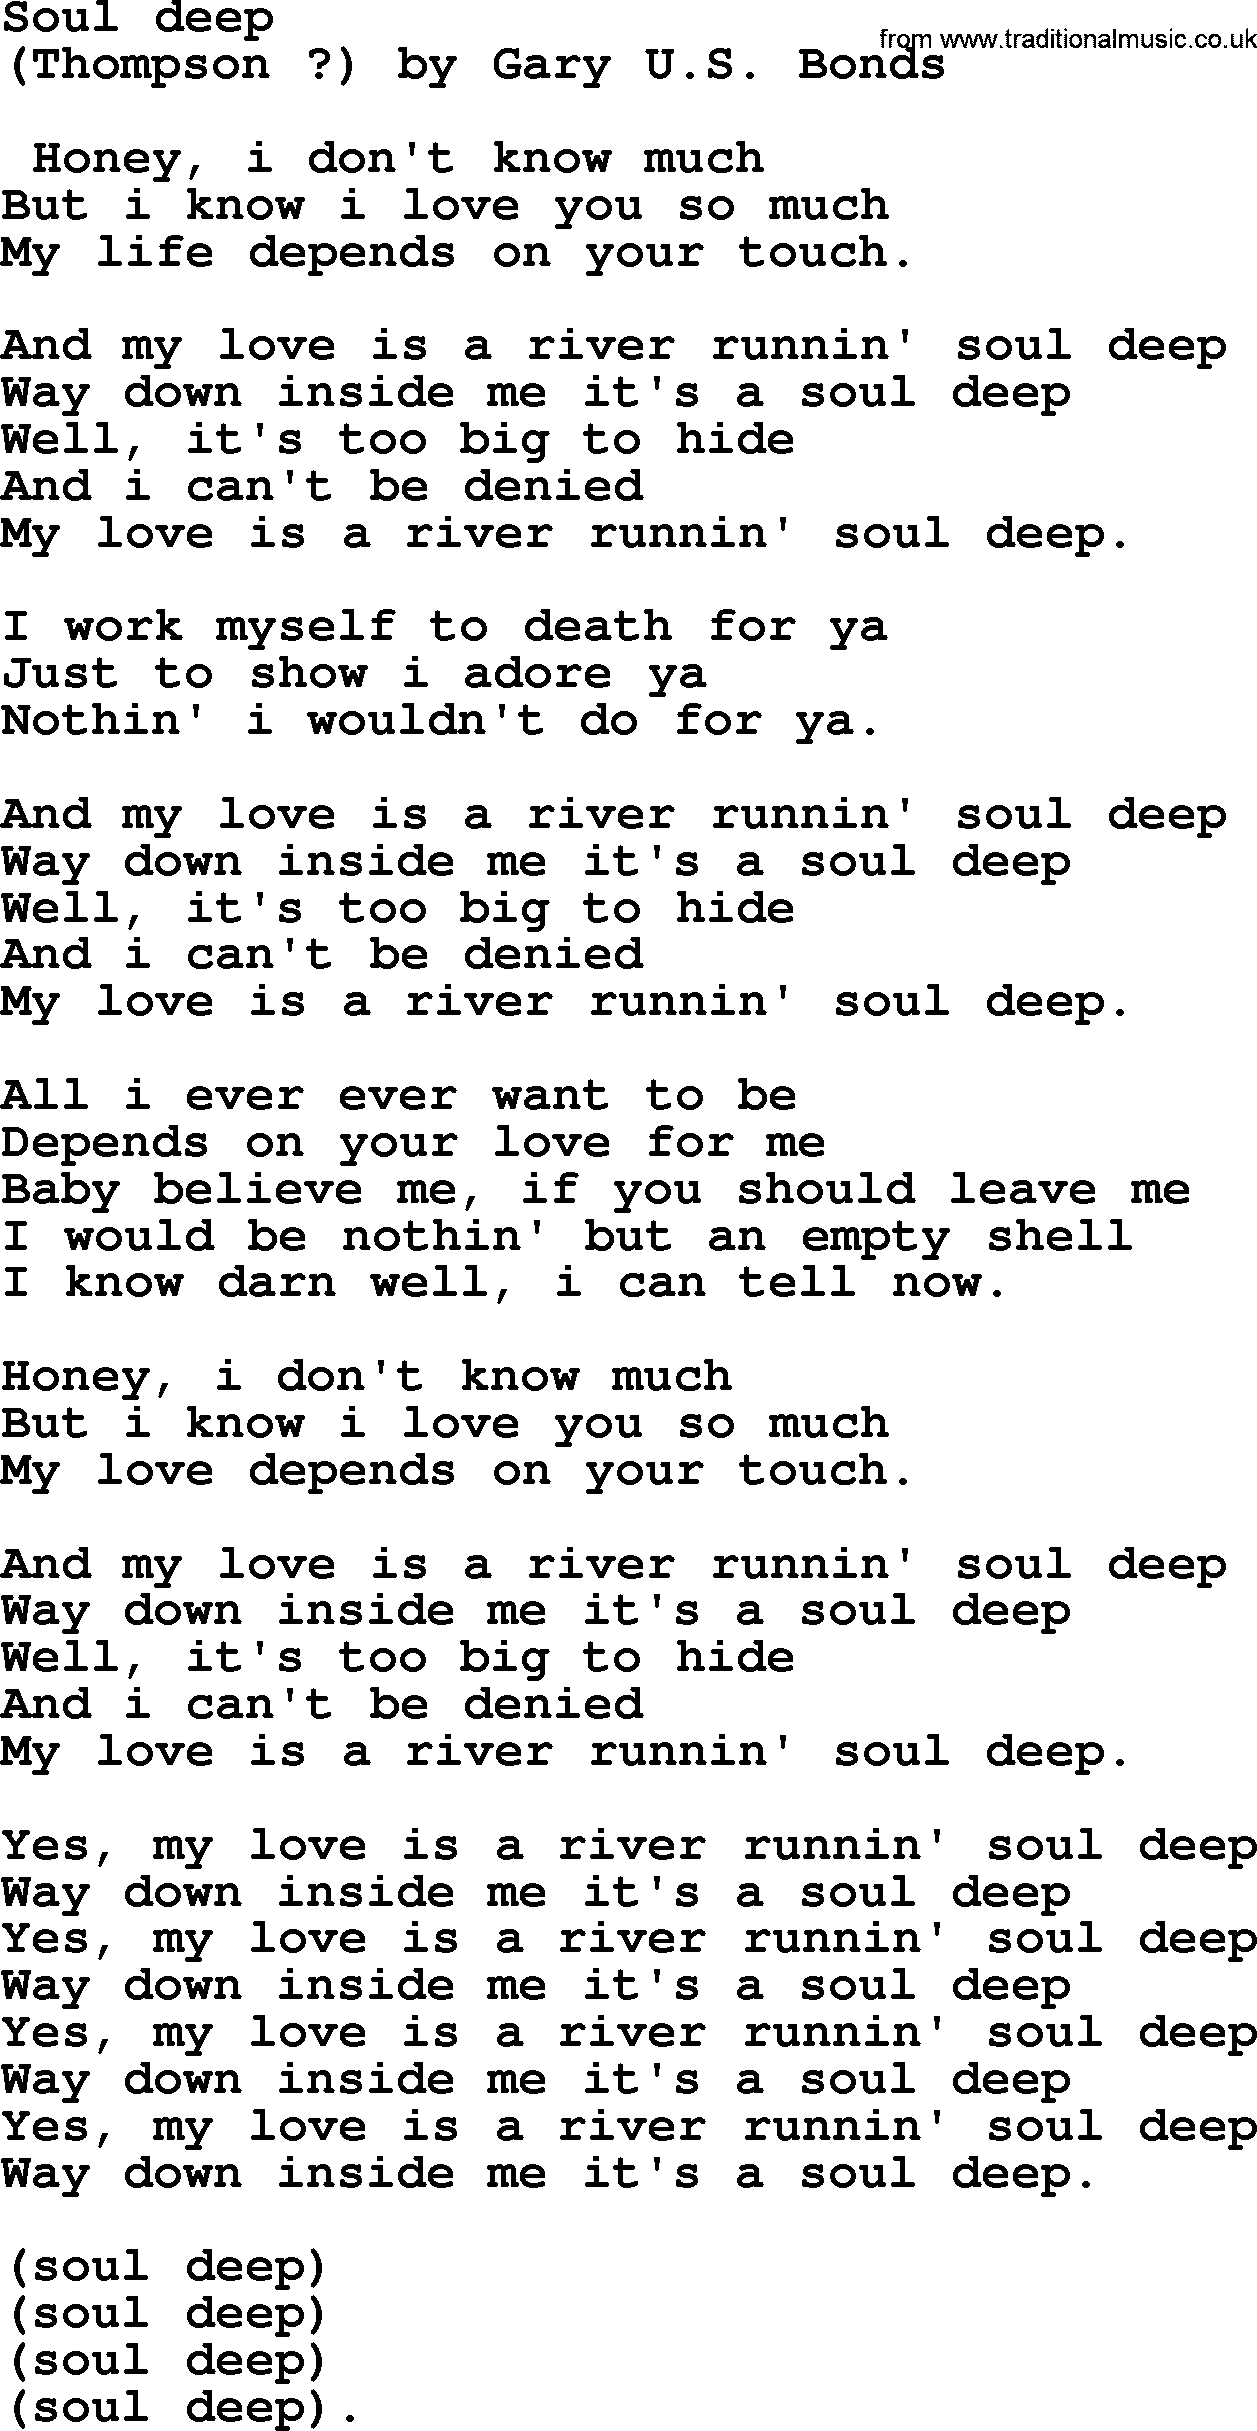 Bruce Springsteen song: Soul Deep lyrics